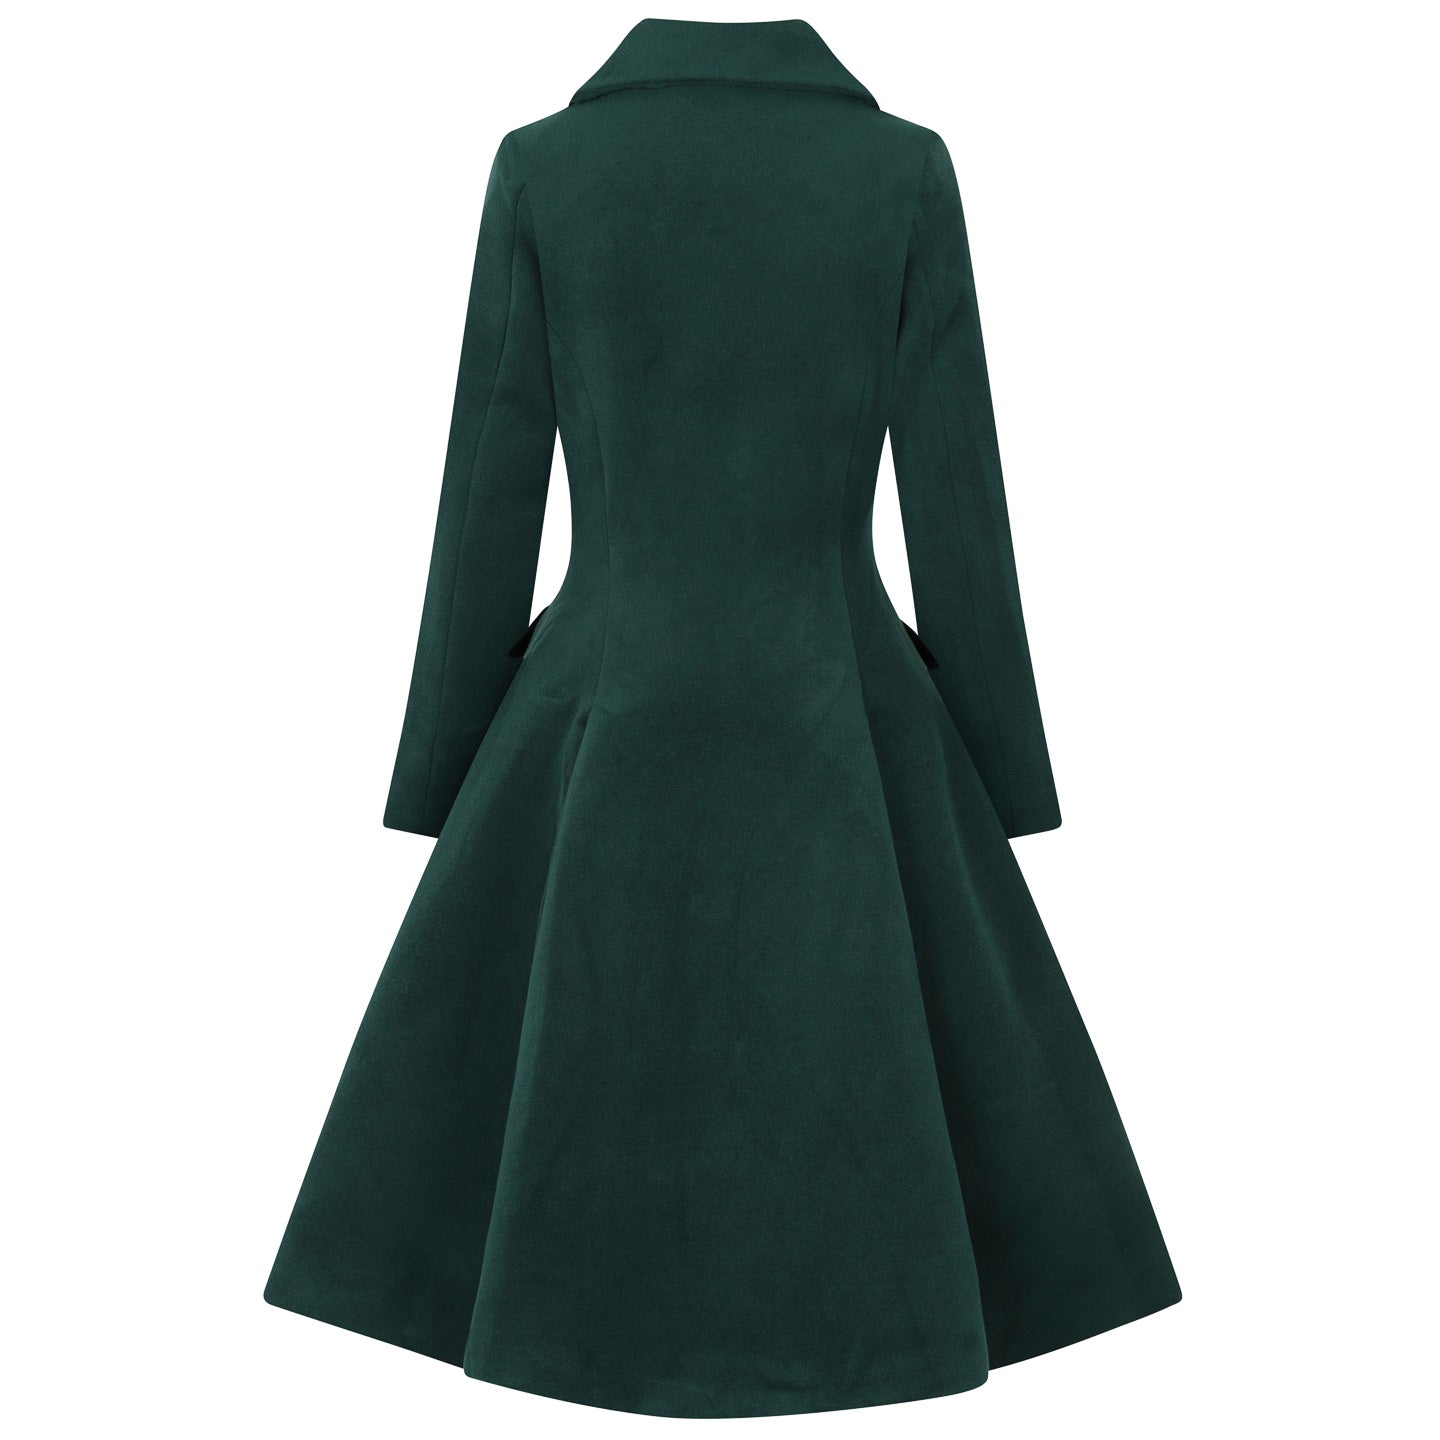 Emerald Green Vintage Inspired Classic Swing Coat - Pretty Kitty Fashion